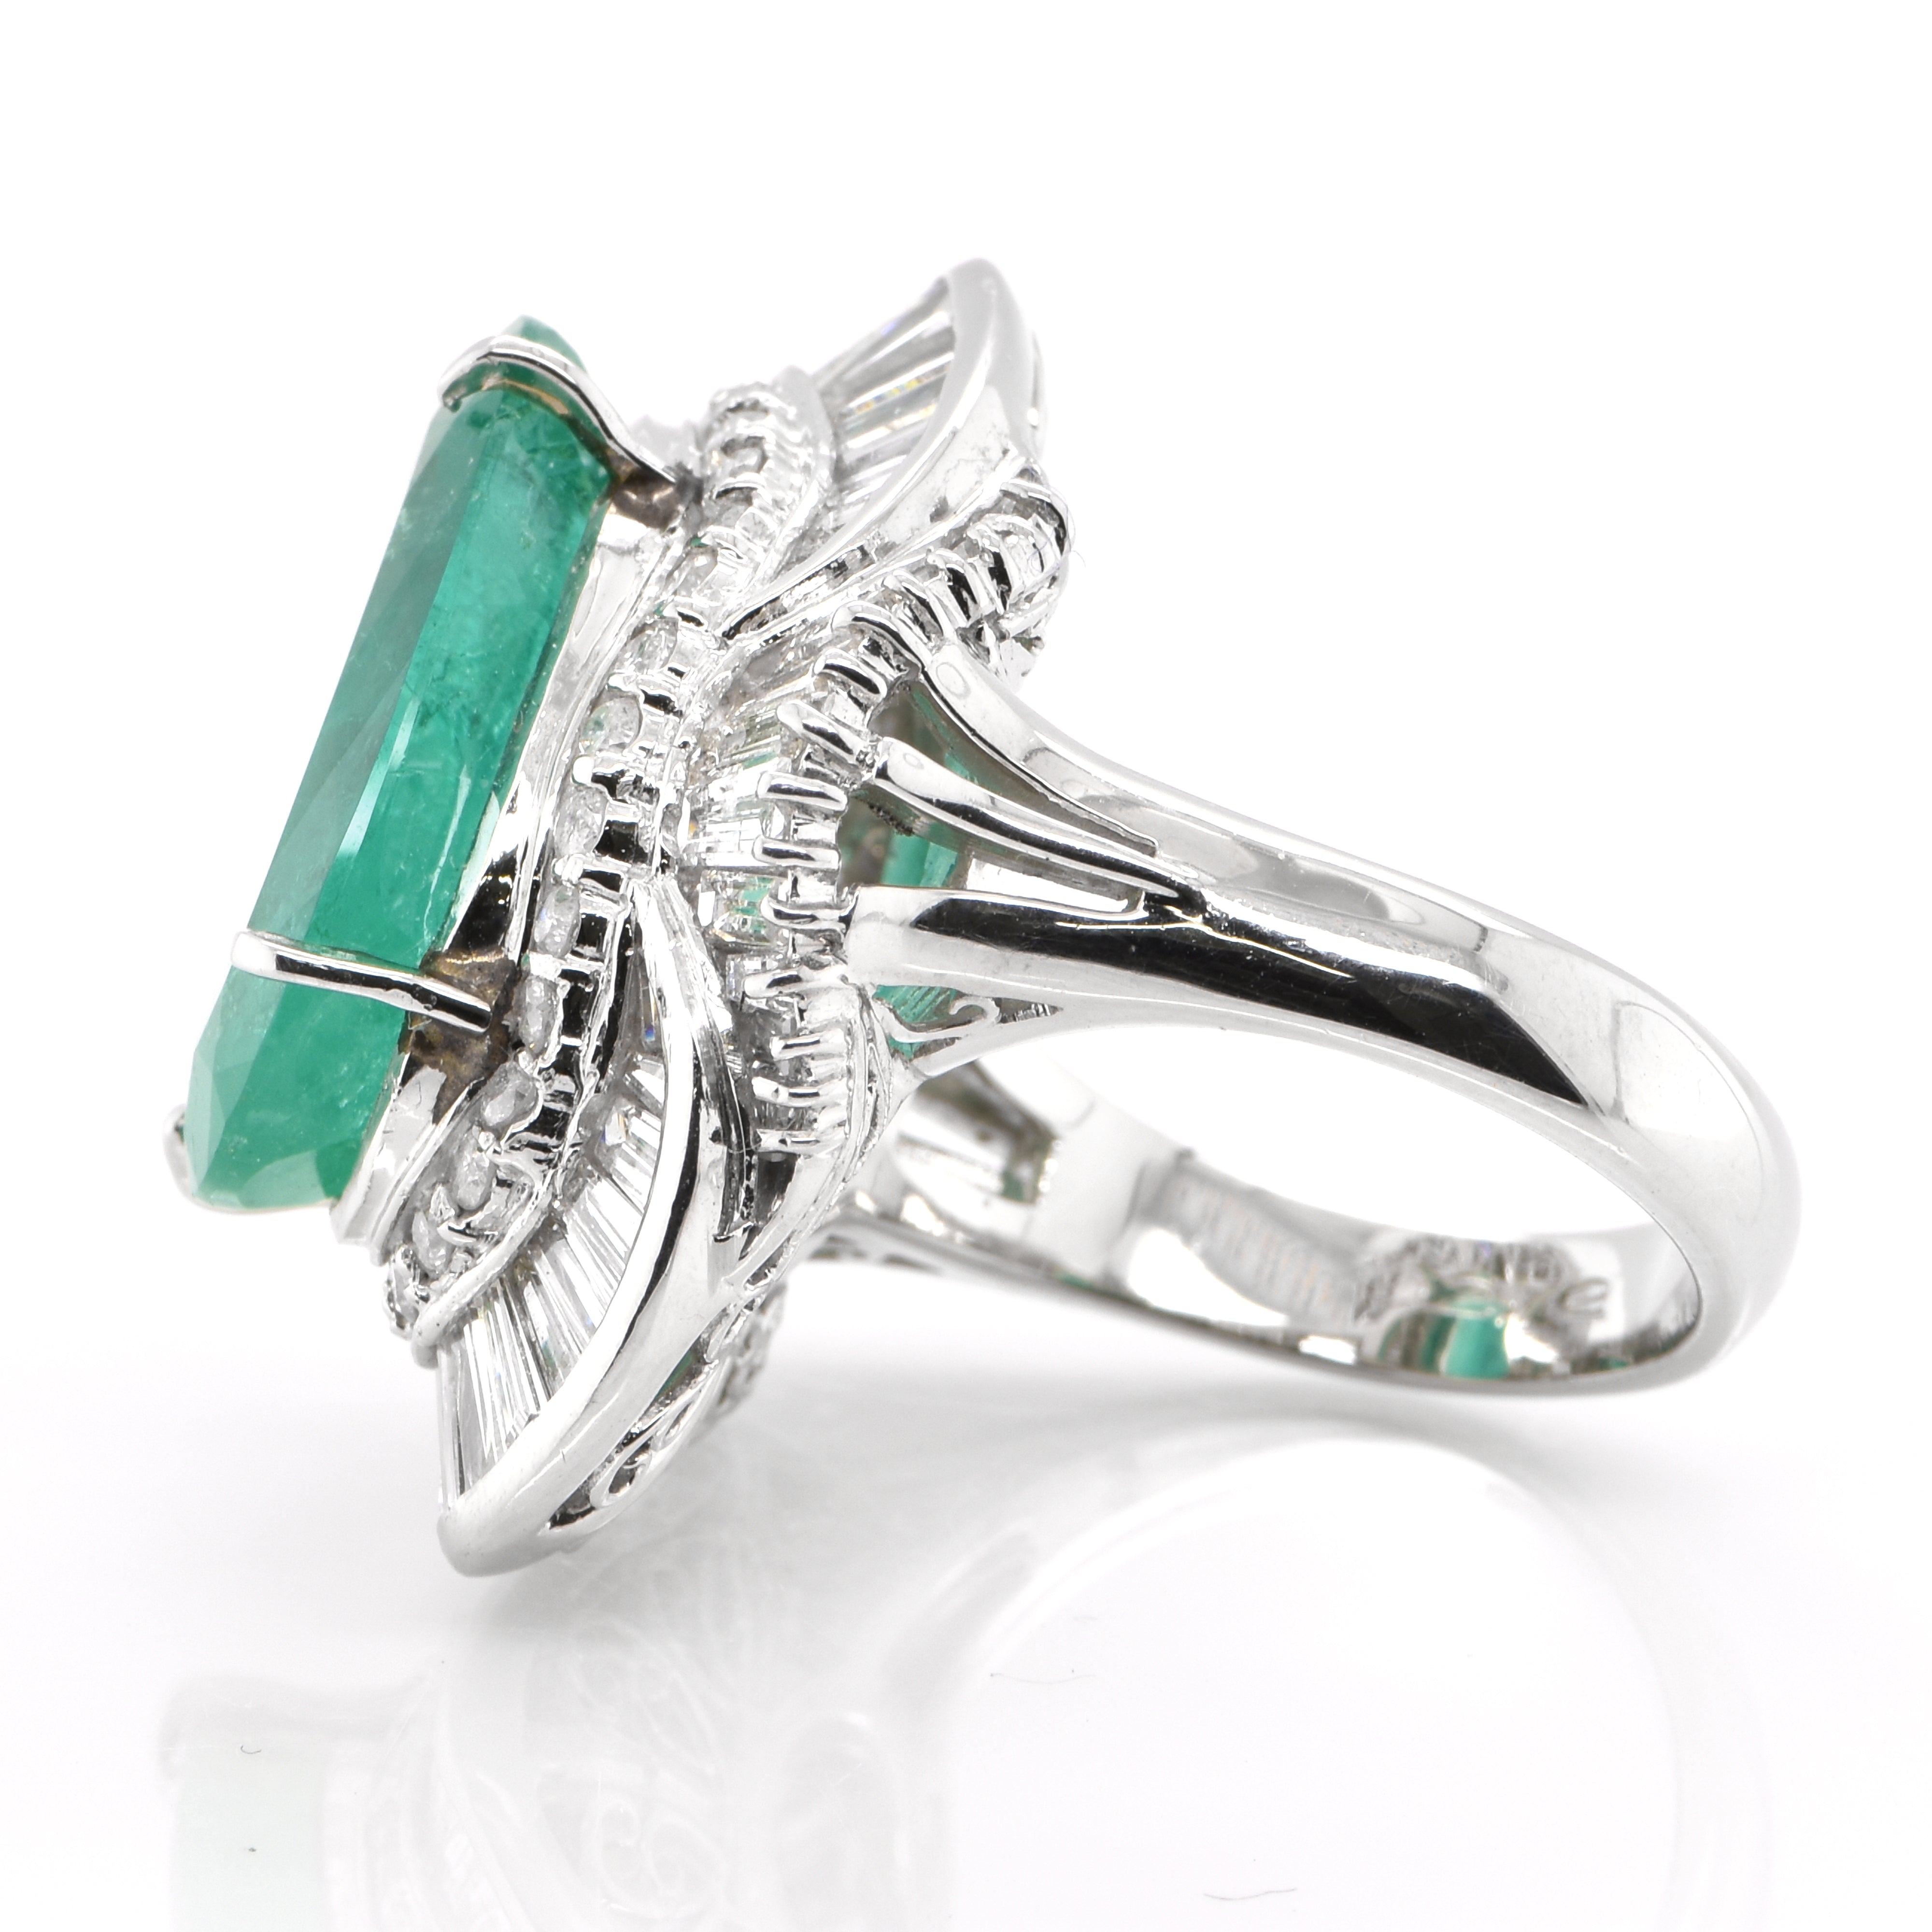 12.81 Carat Natural Emerald and Diamond Cocktail Ring set in Platinum